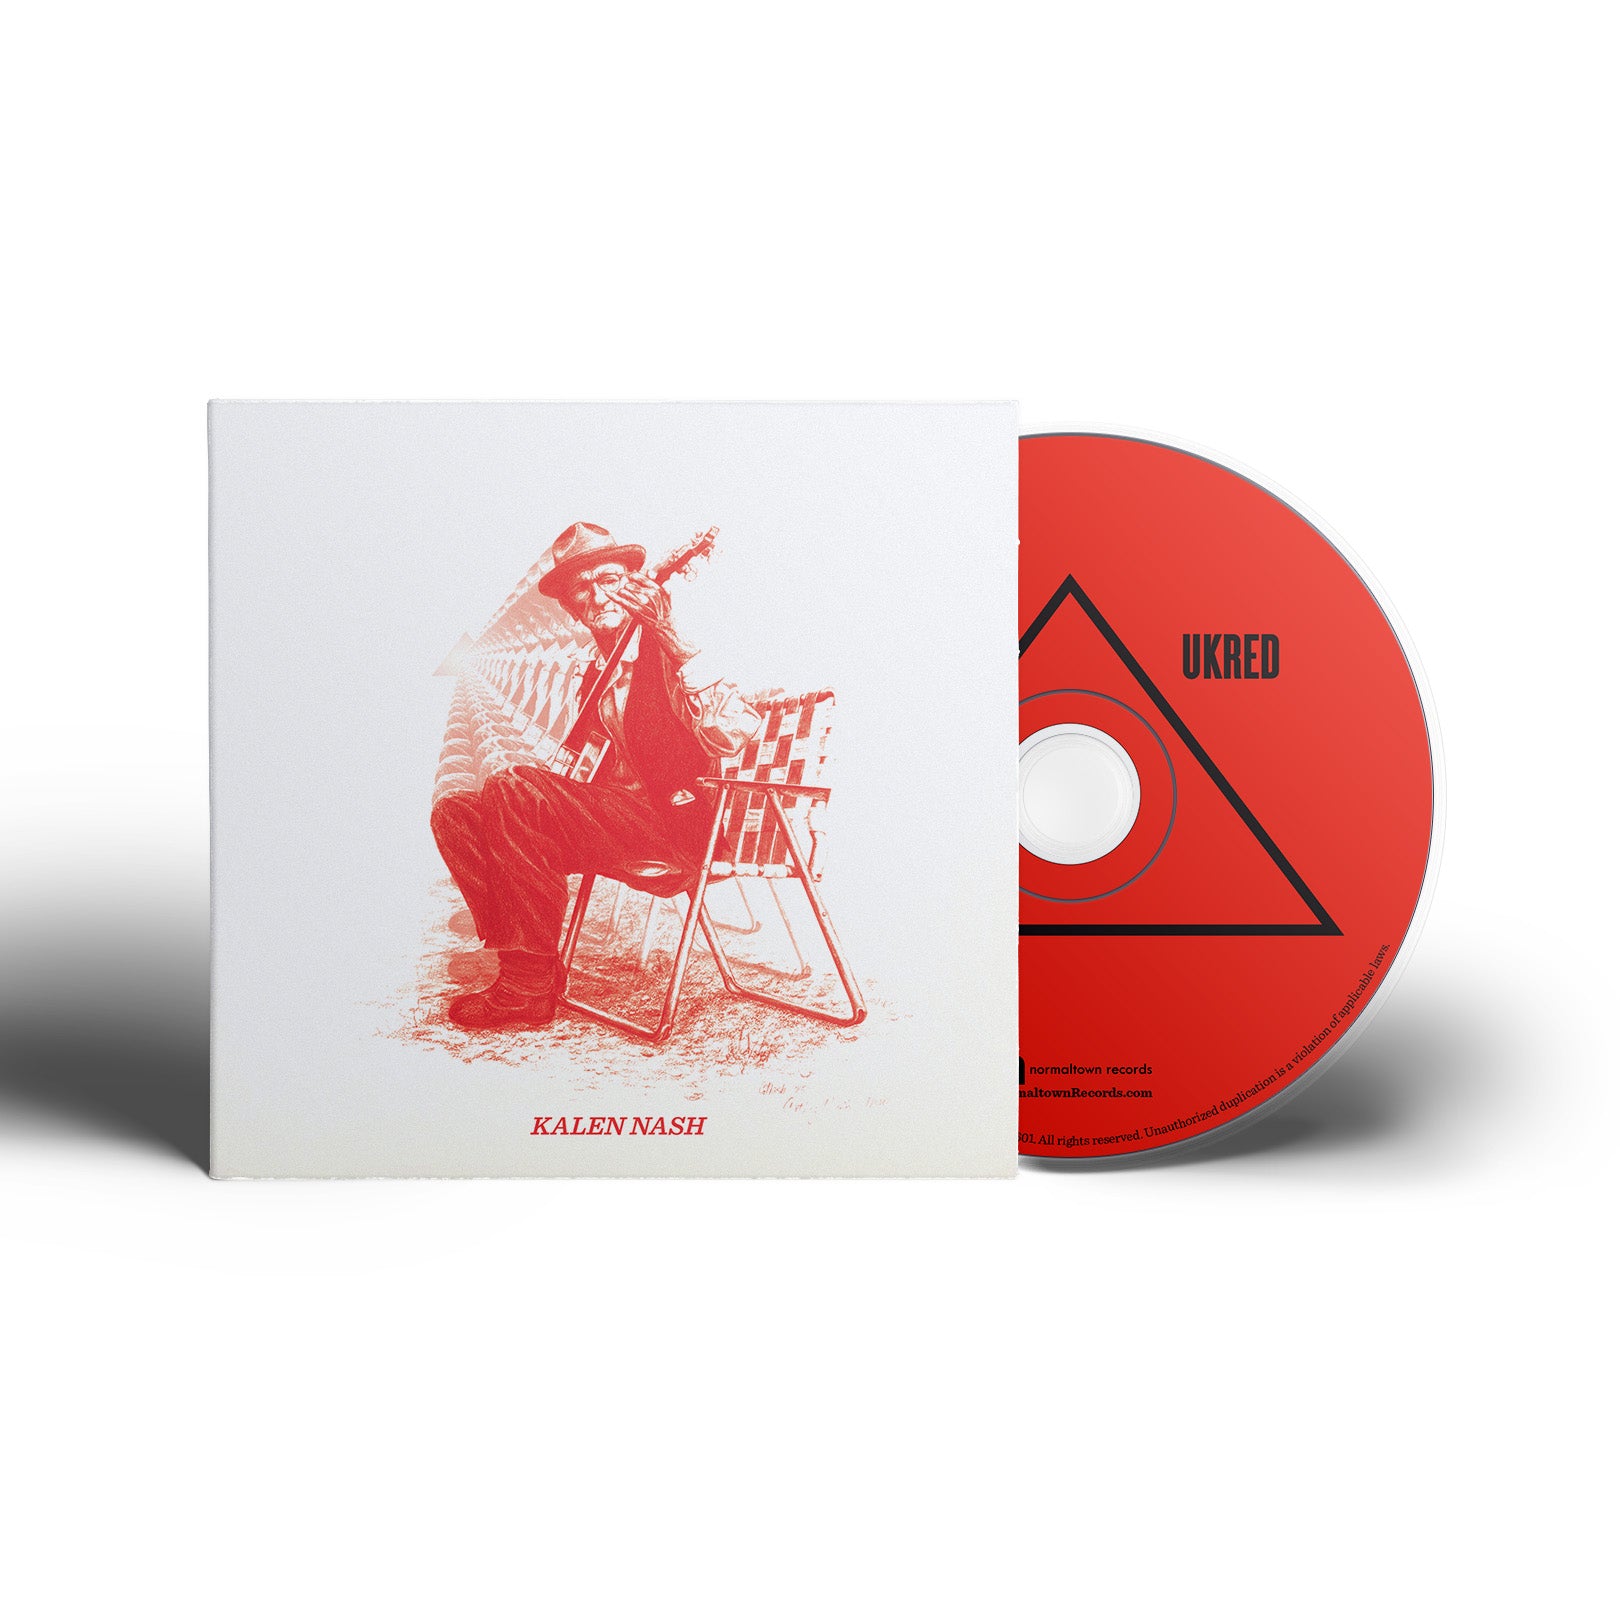 Kalen Nash - Ukred [CD]